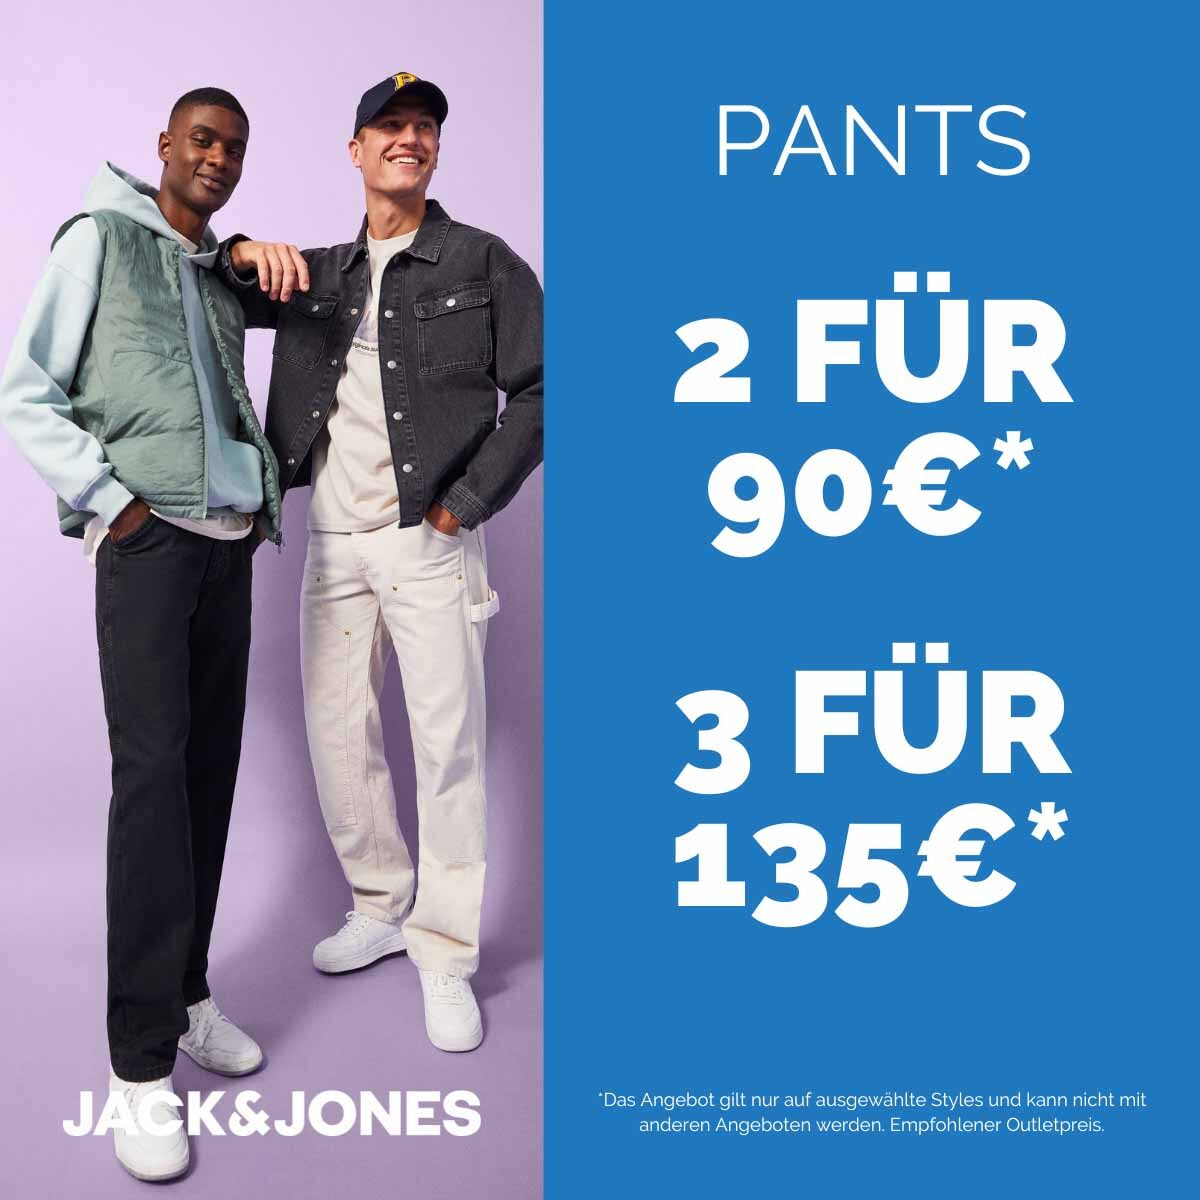 Jack&Jones Pants Aktion